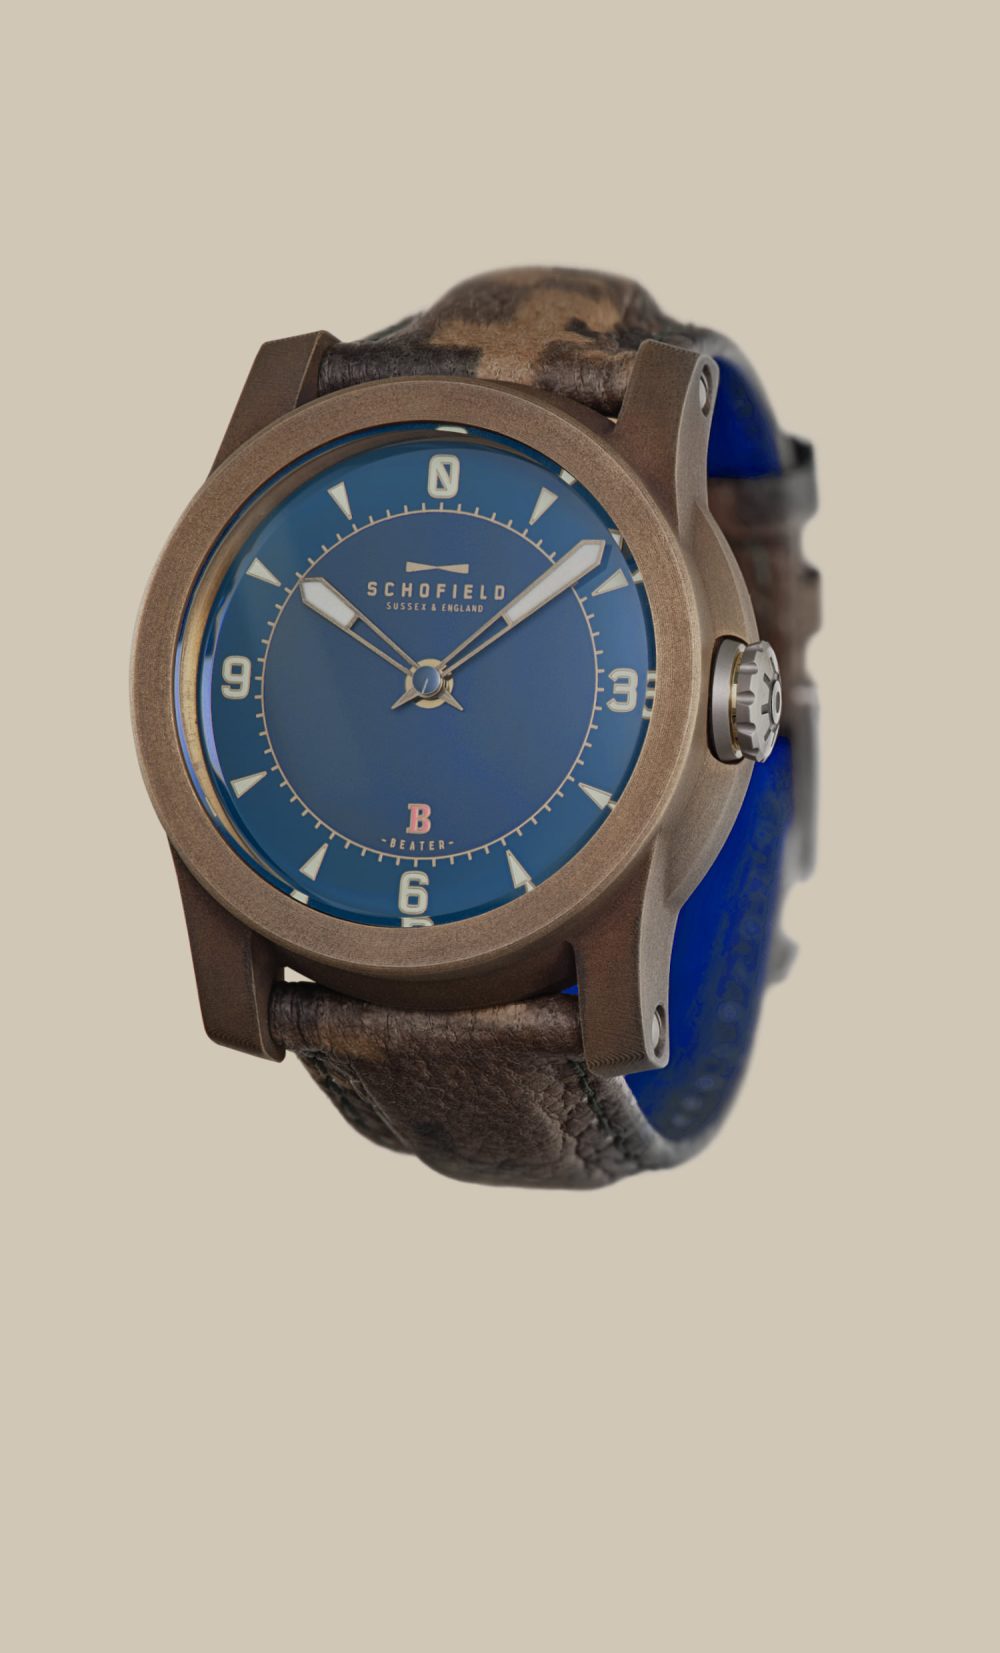 Patinated Bronze watch